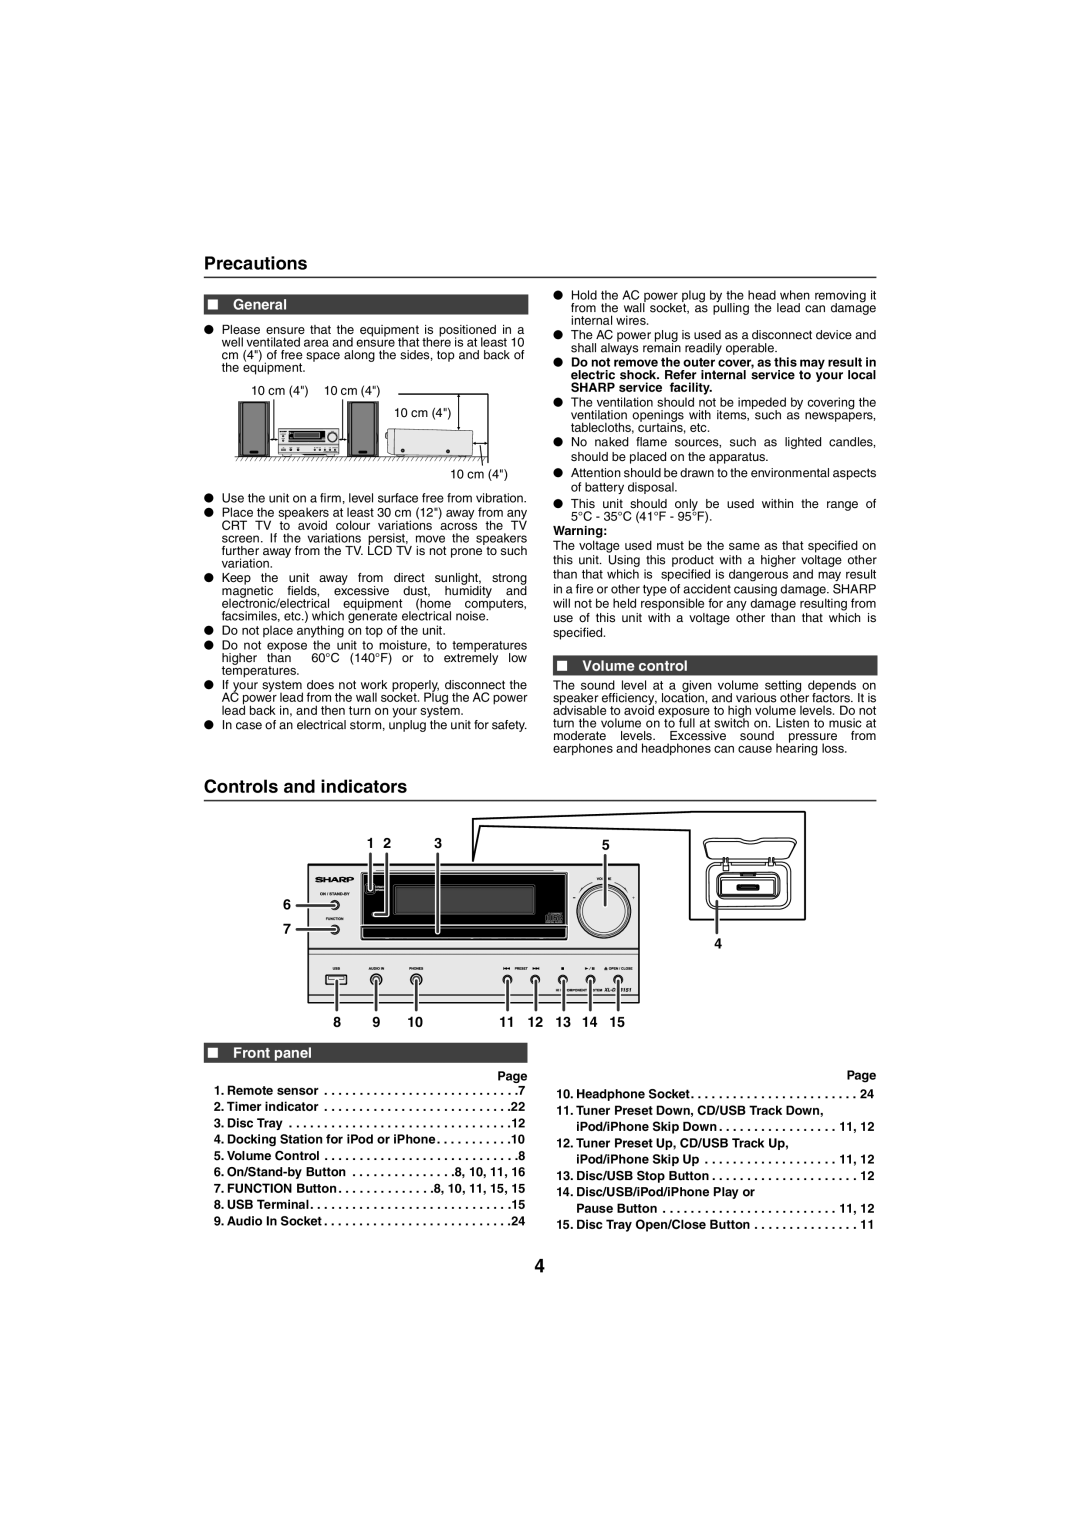 Sharp XL-DAB151PH(S), XL-DAB151PH(BK) Precautions, Controls and indicators, General, Volume control, Front panel 